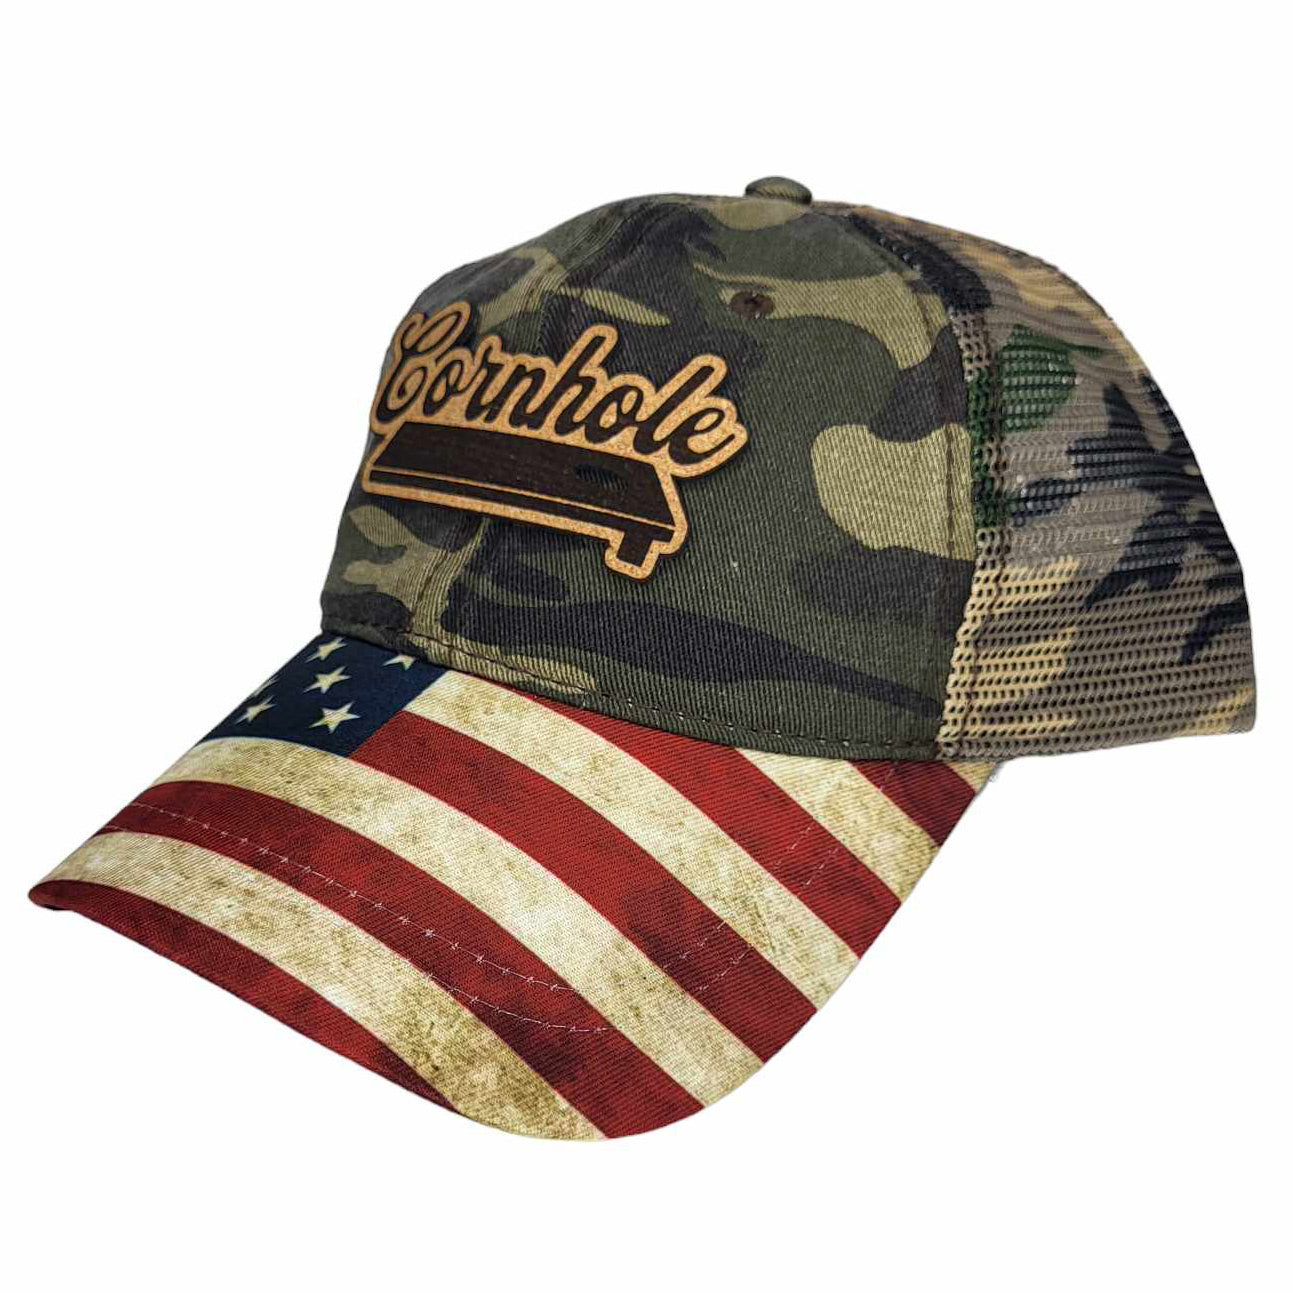 Cornhole America Flag Bill Hat